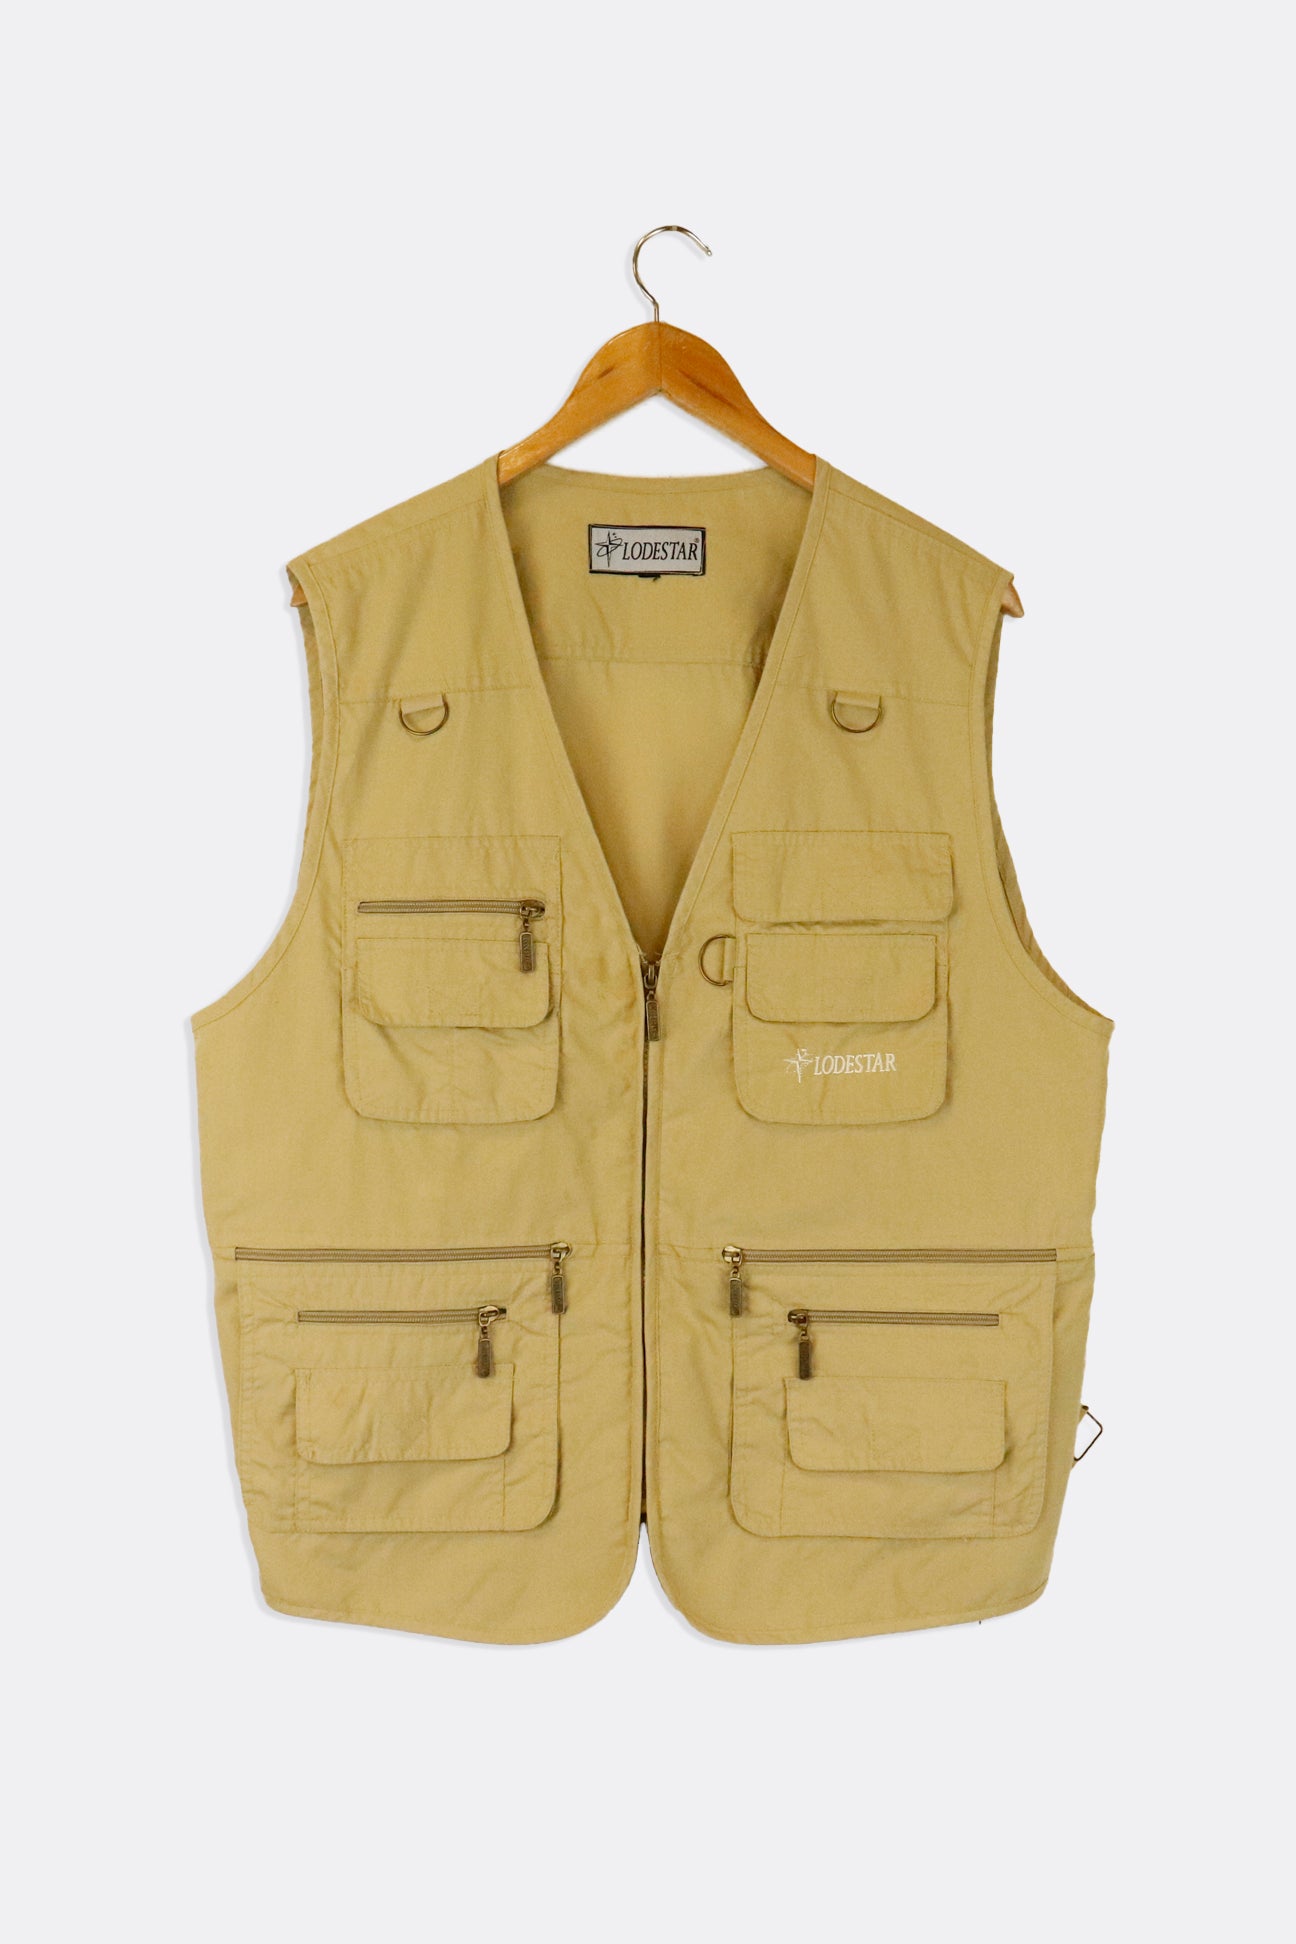 Vintage Zip Up Vest For Fishing Four Large Pockets Buckles All